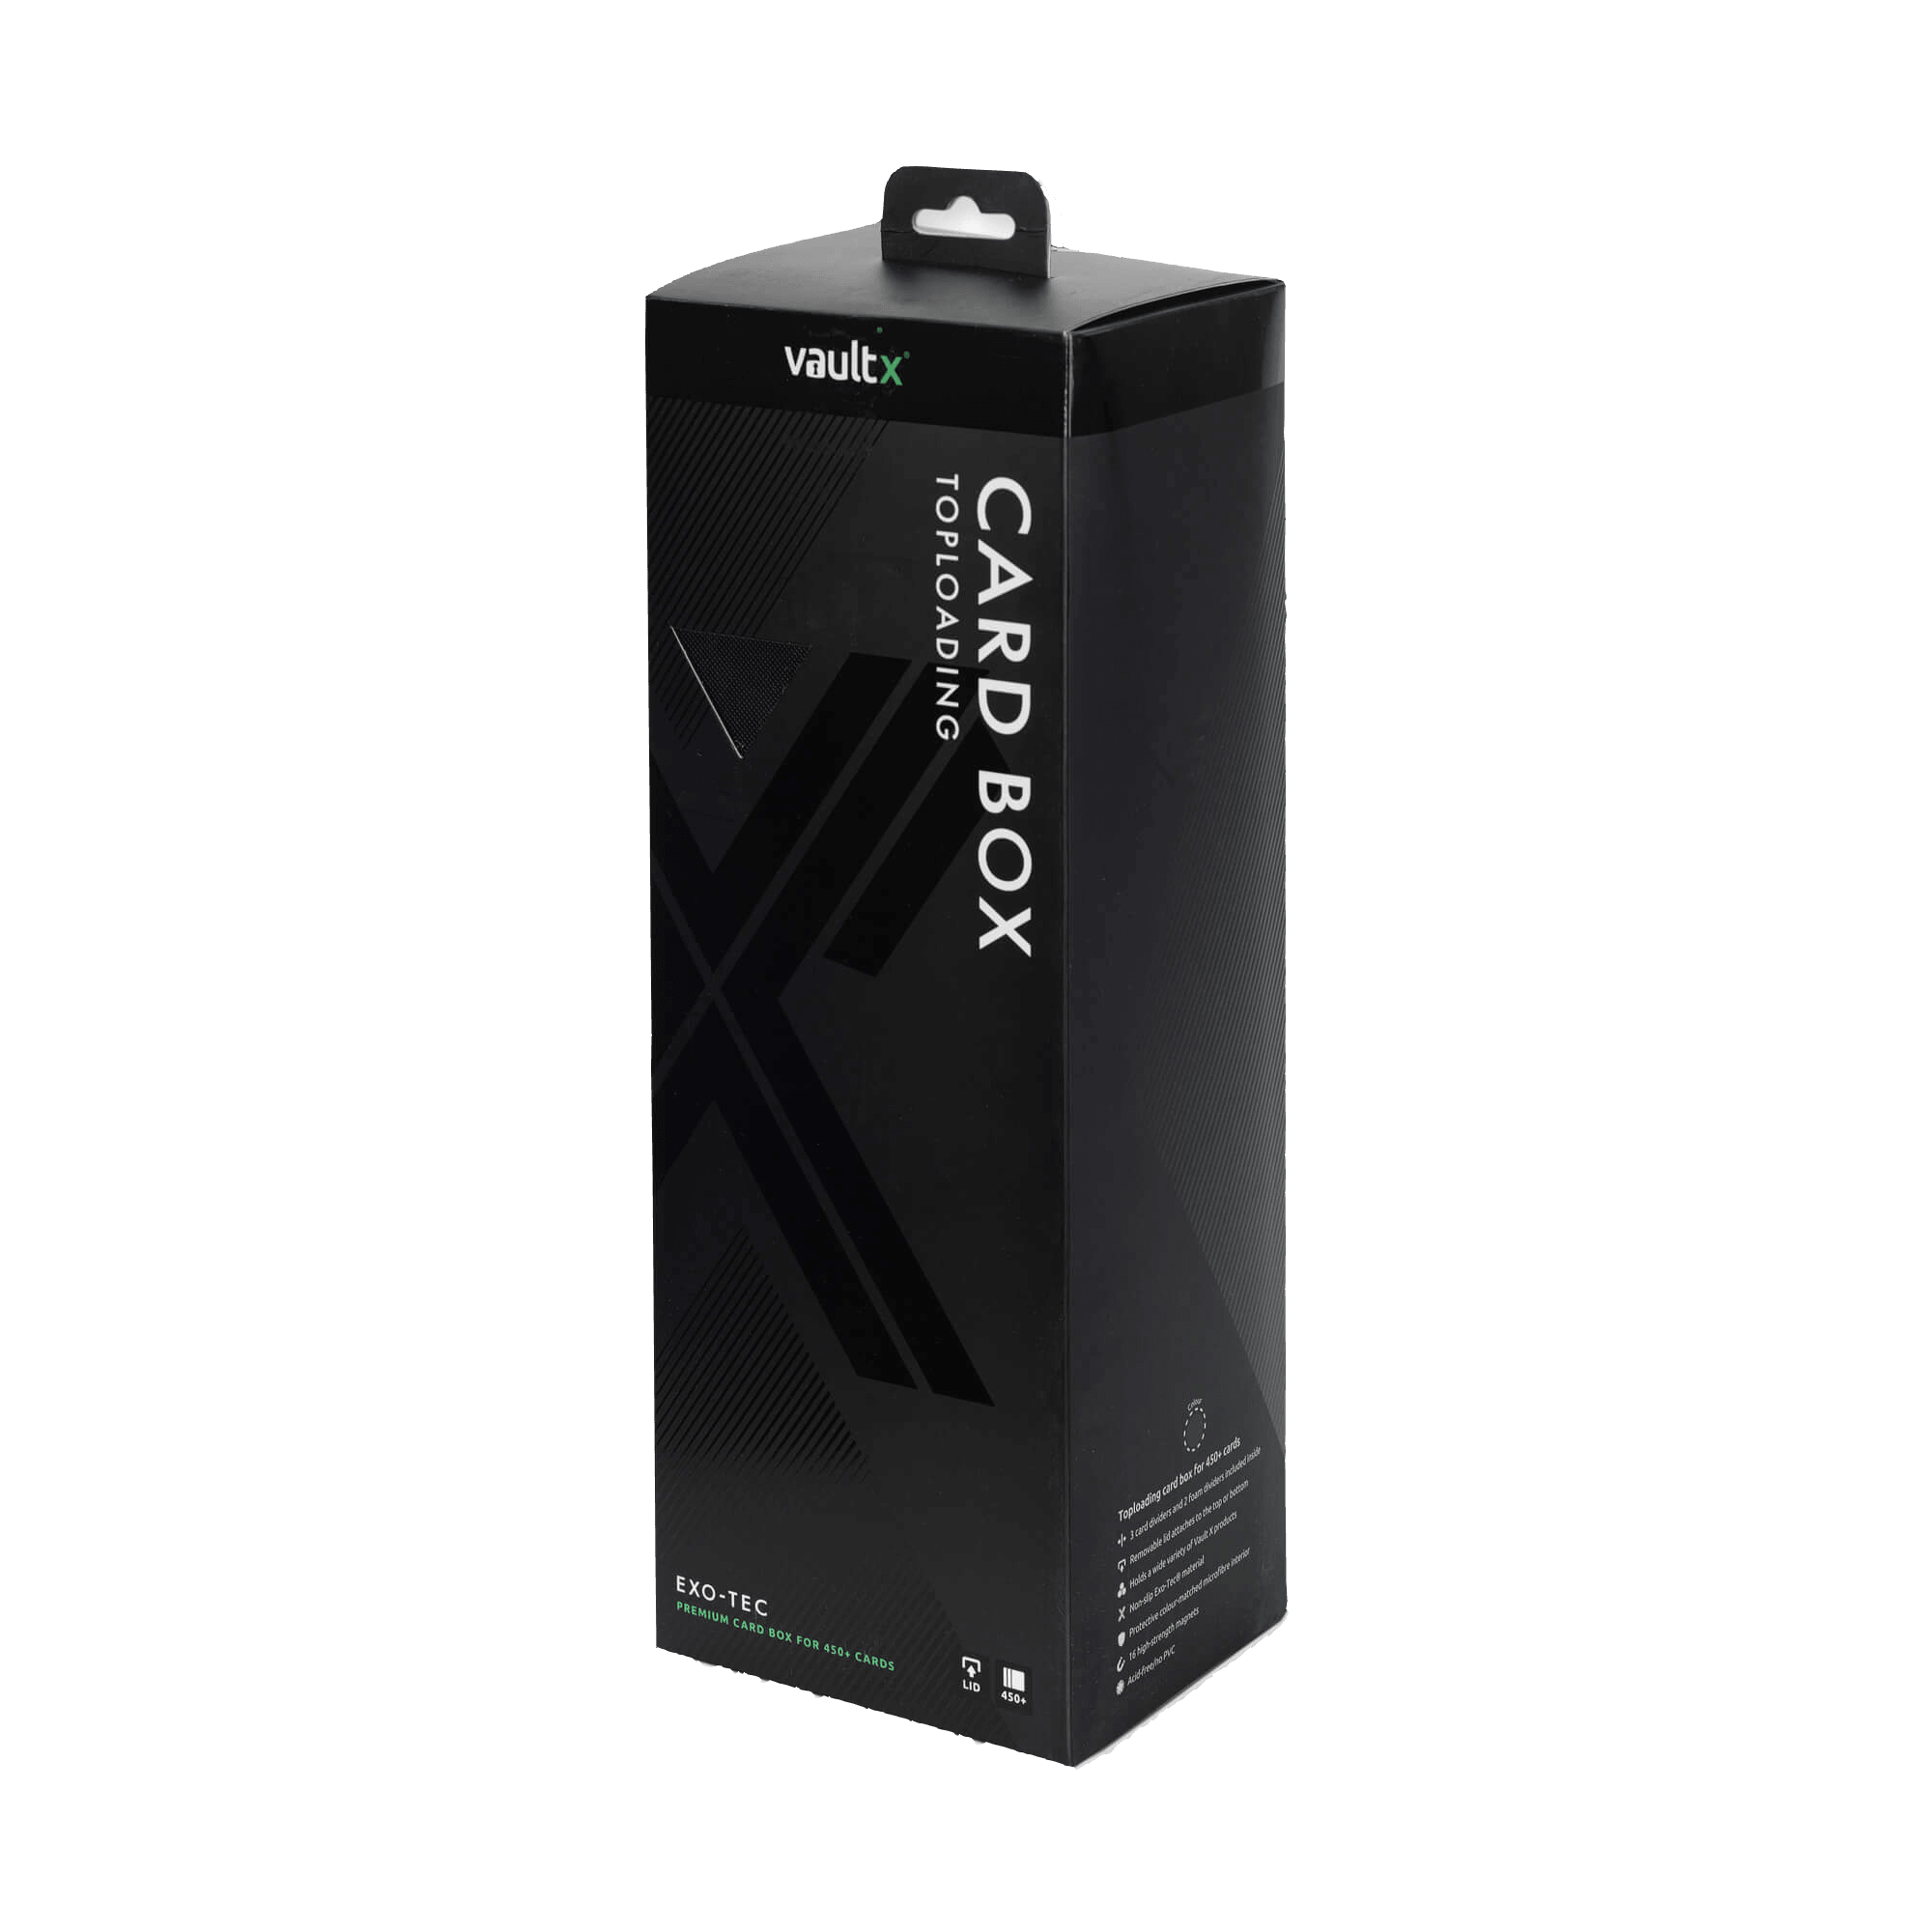 Vault X - Exo-Tec® Card Box 450+ - Black - The Card Vault